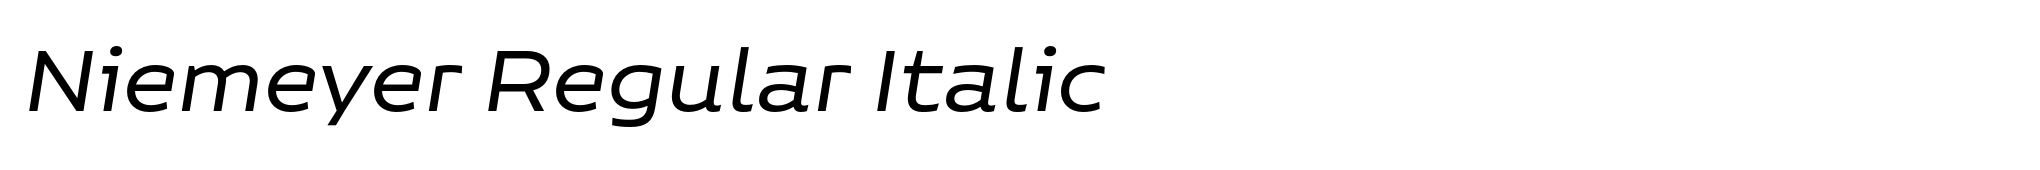 Niemeyer Regular Italic image